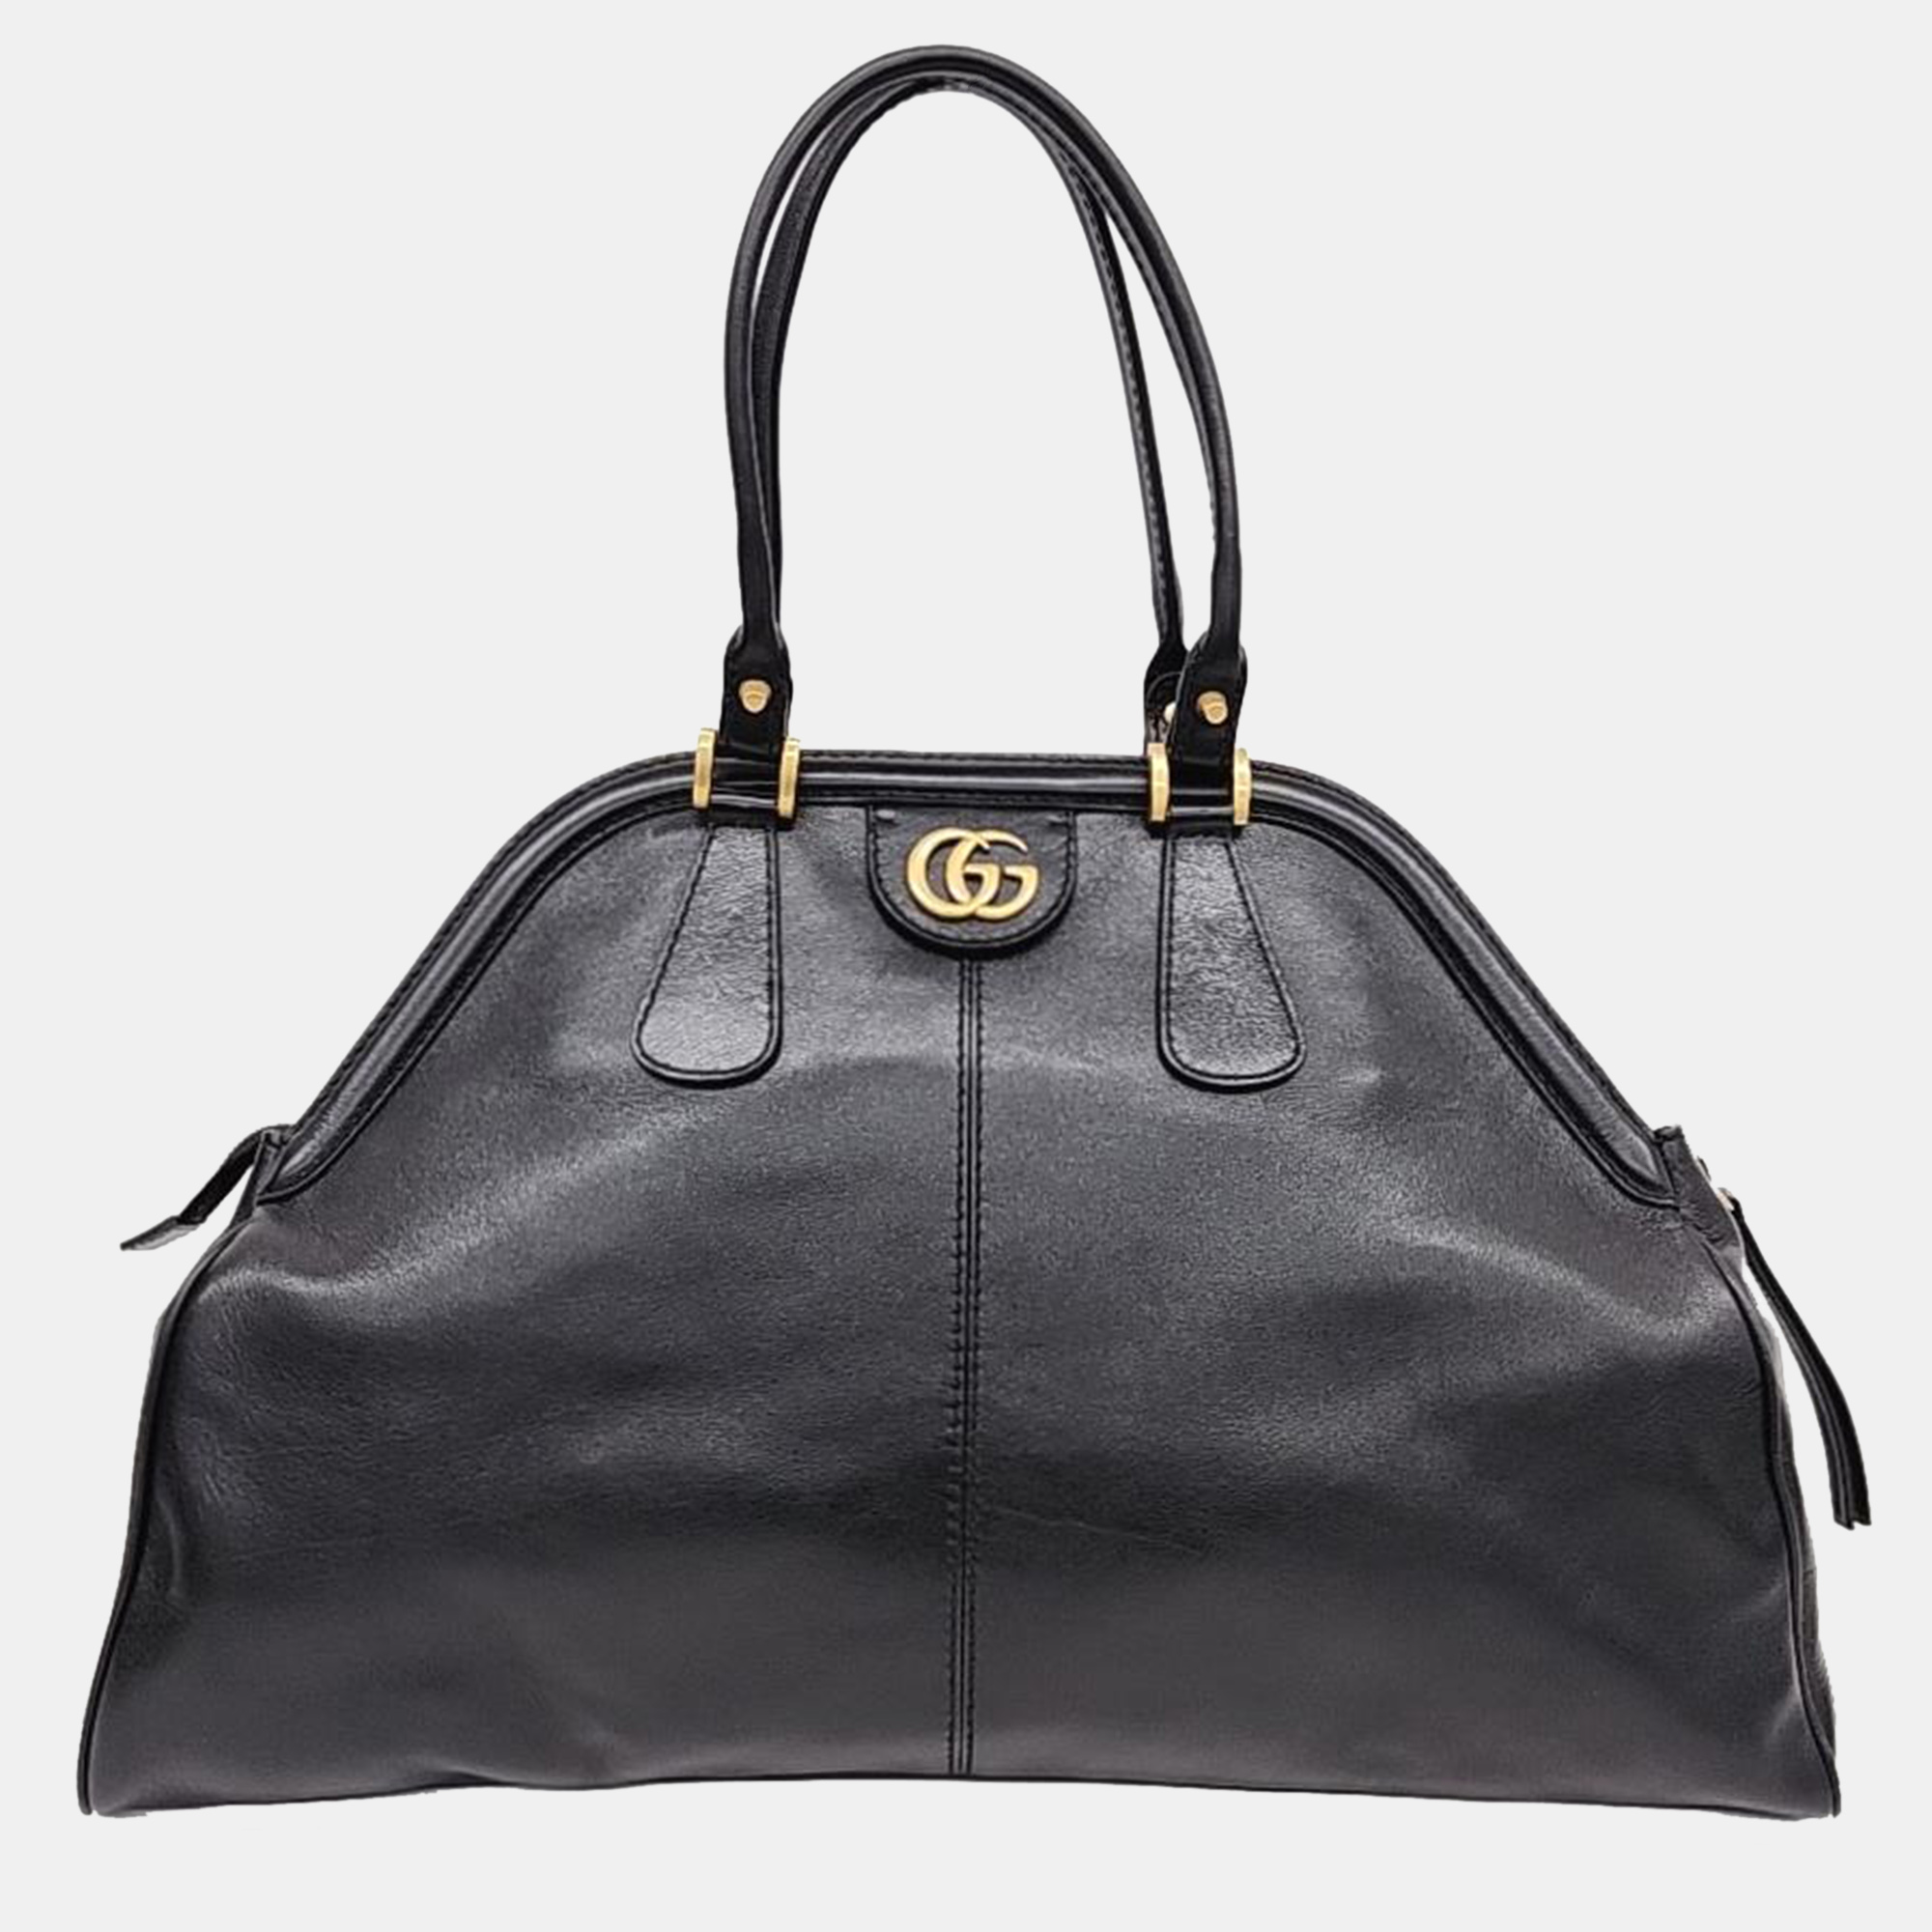 Gucci black leather rebelle tote bag